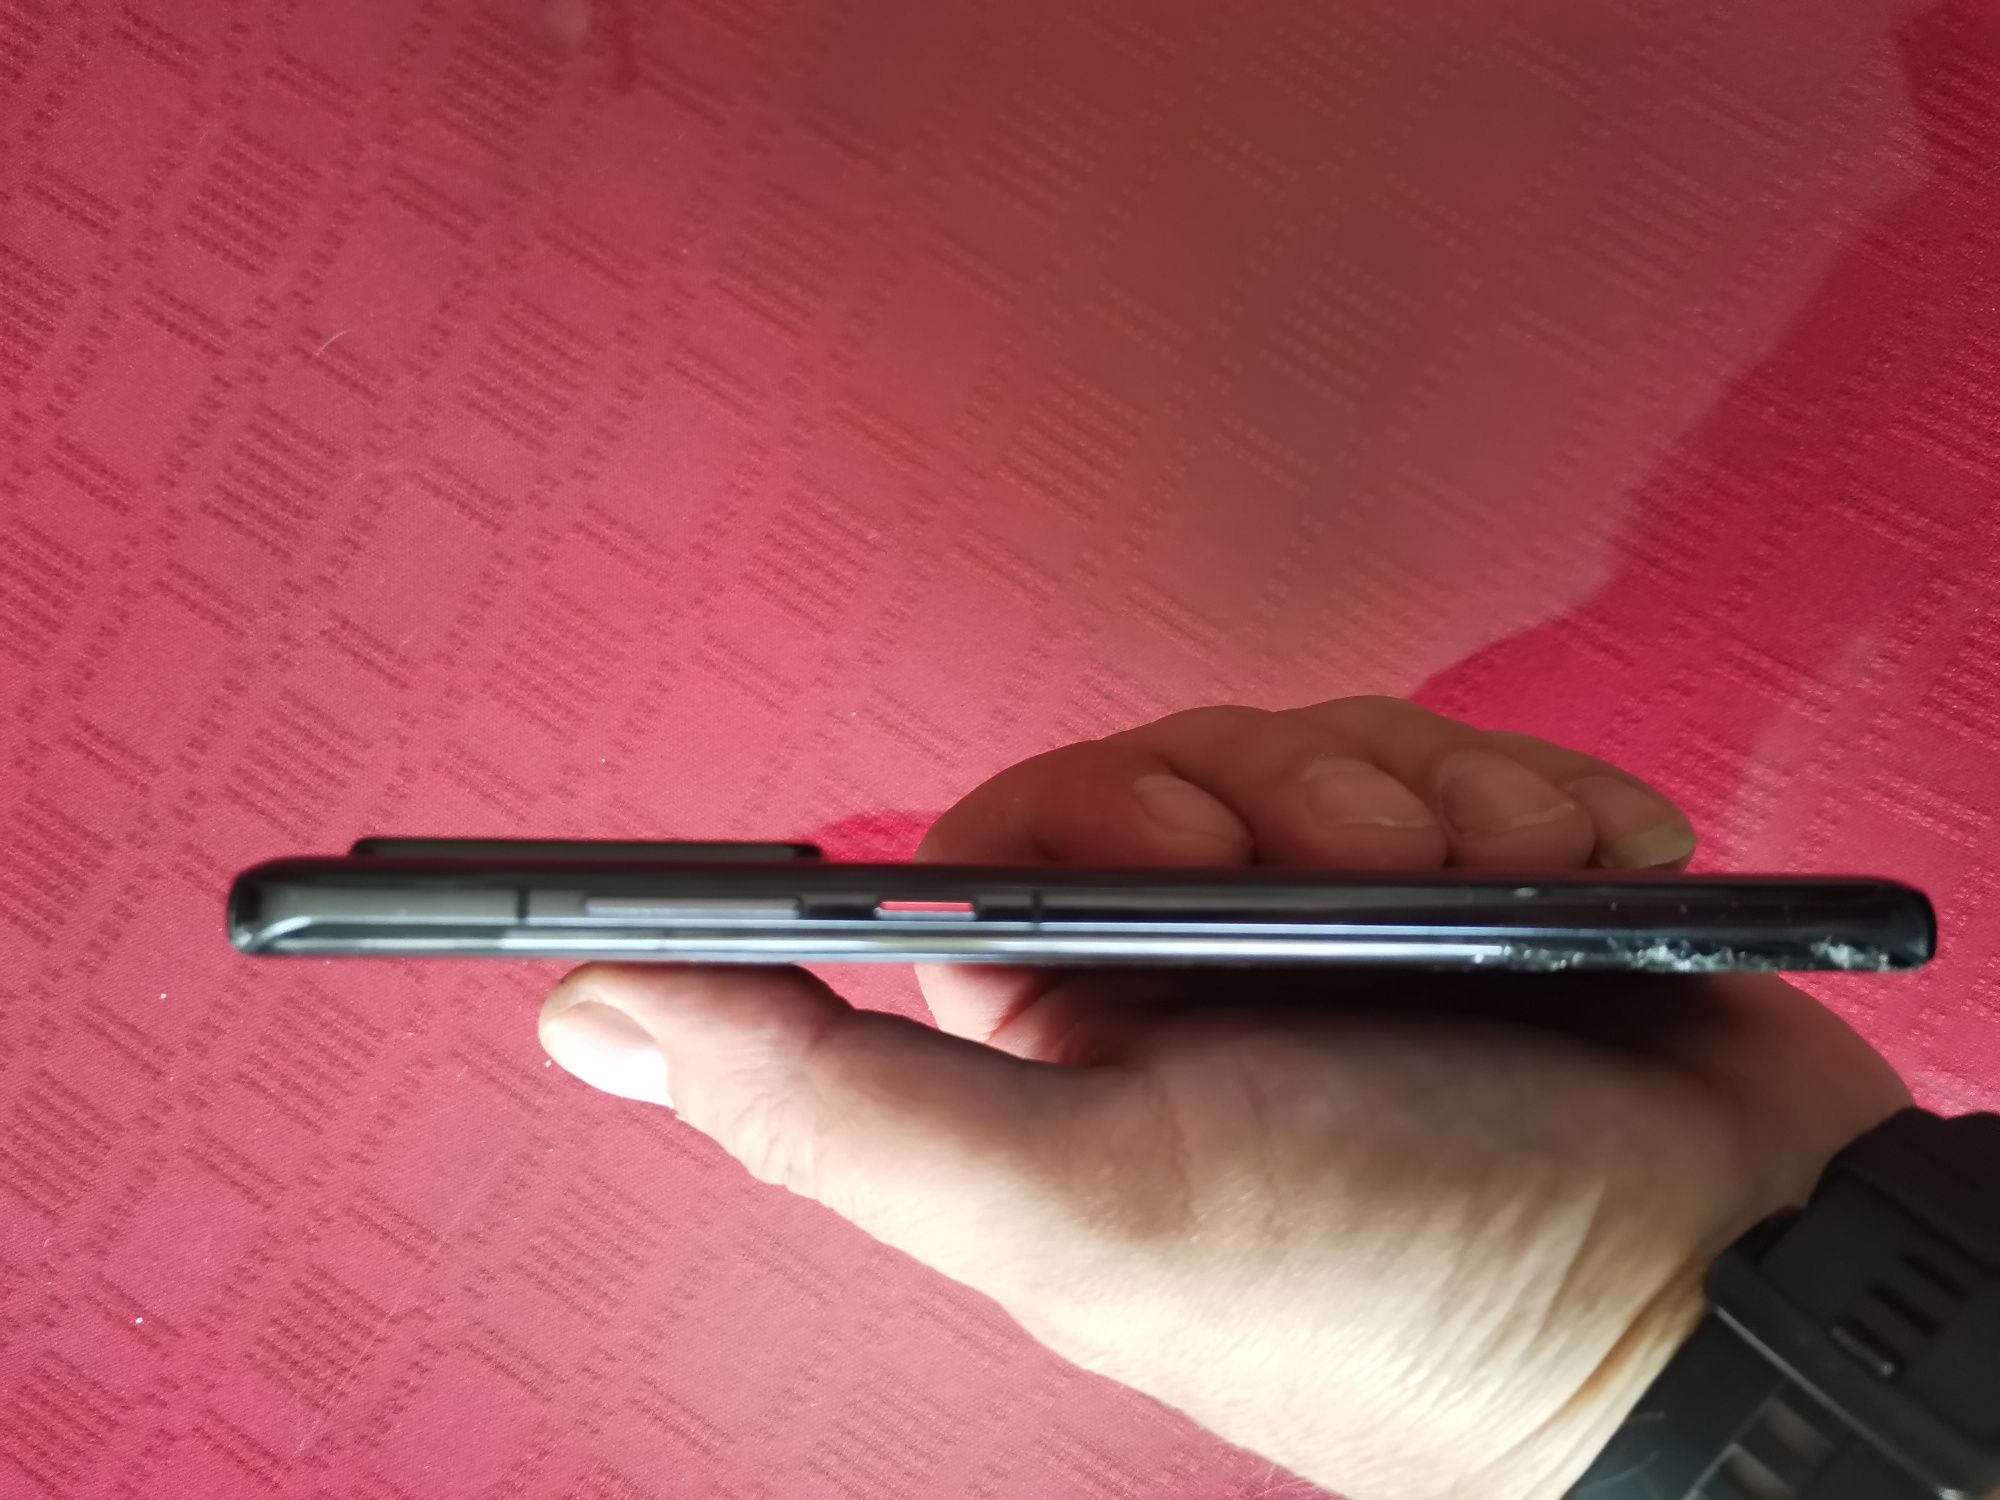 Vând Huawei P40 Pro cu display-ul spart.